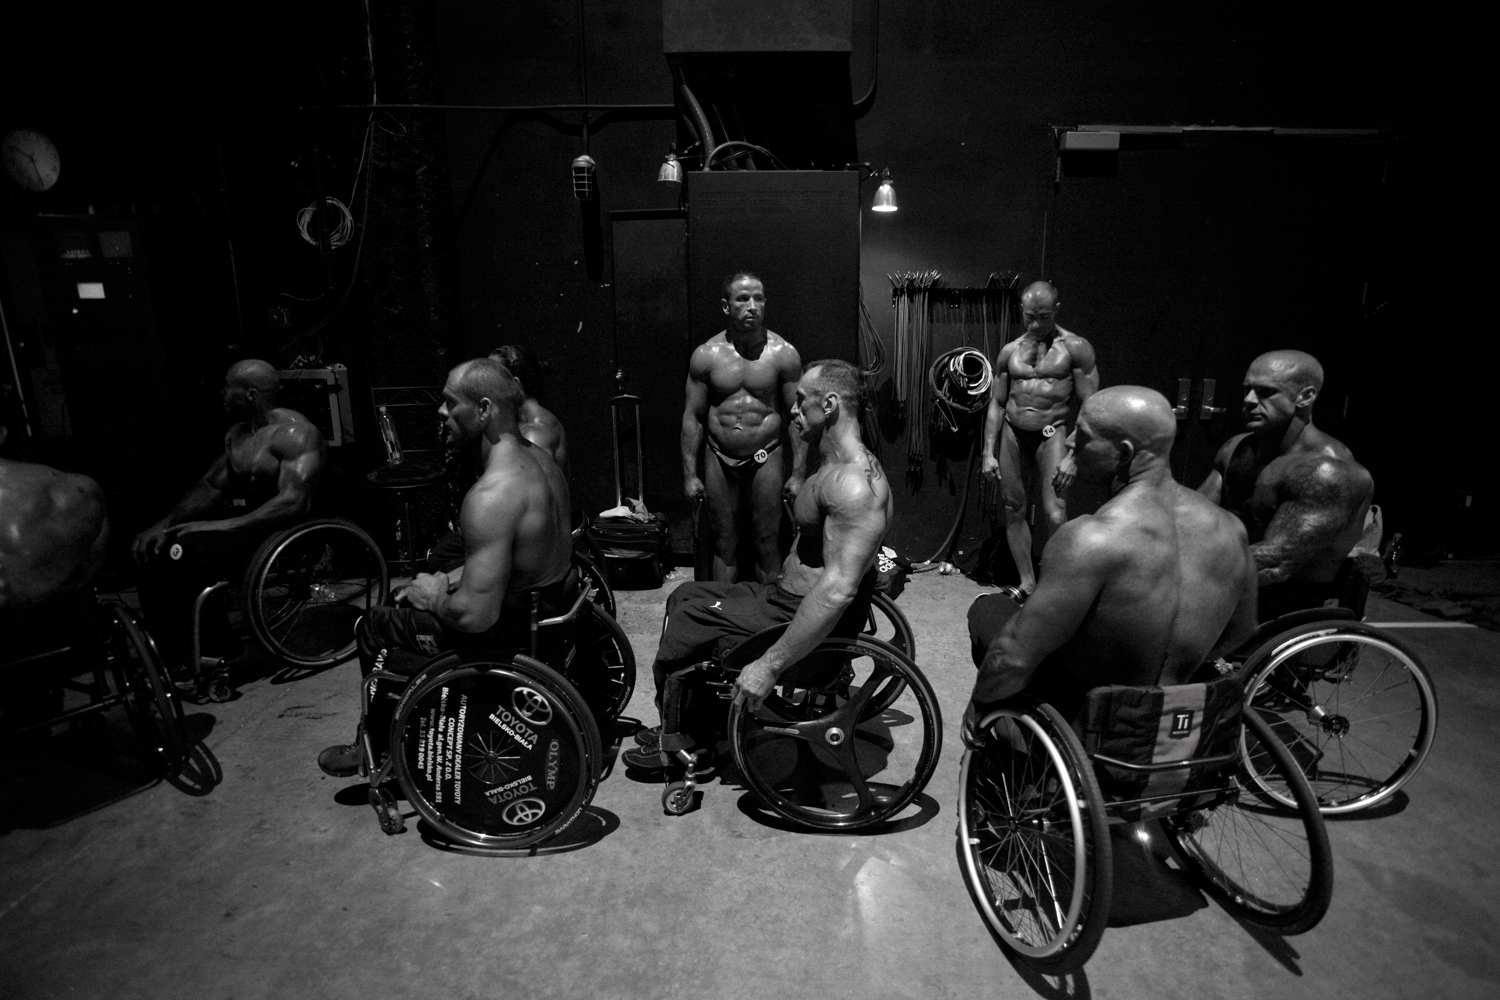 Wheelchair athletes wait their turn to take the stage at the wheelchair bodybuilding pro show in Houston.